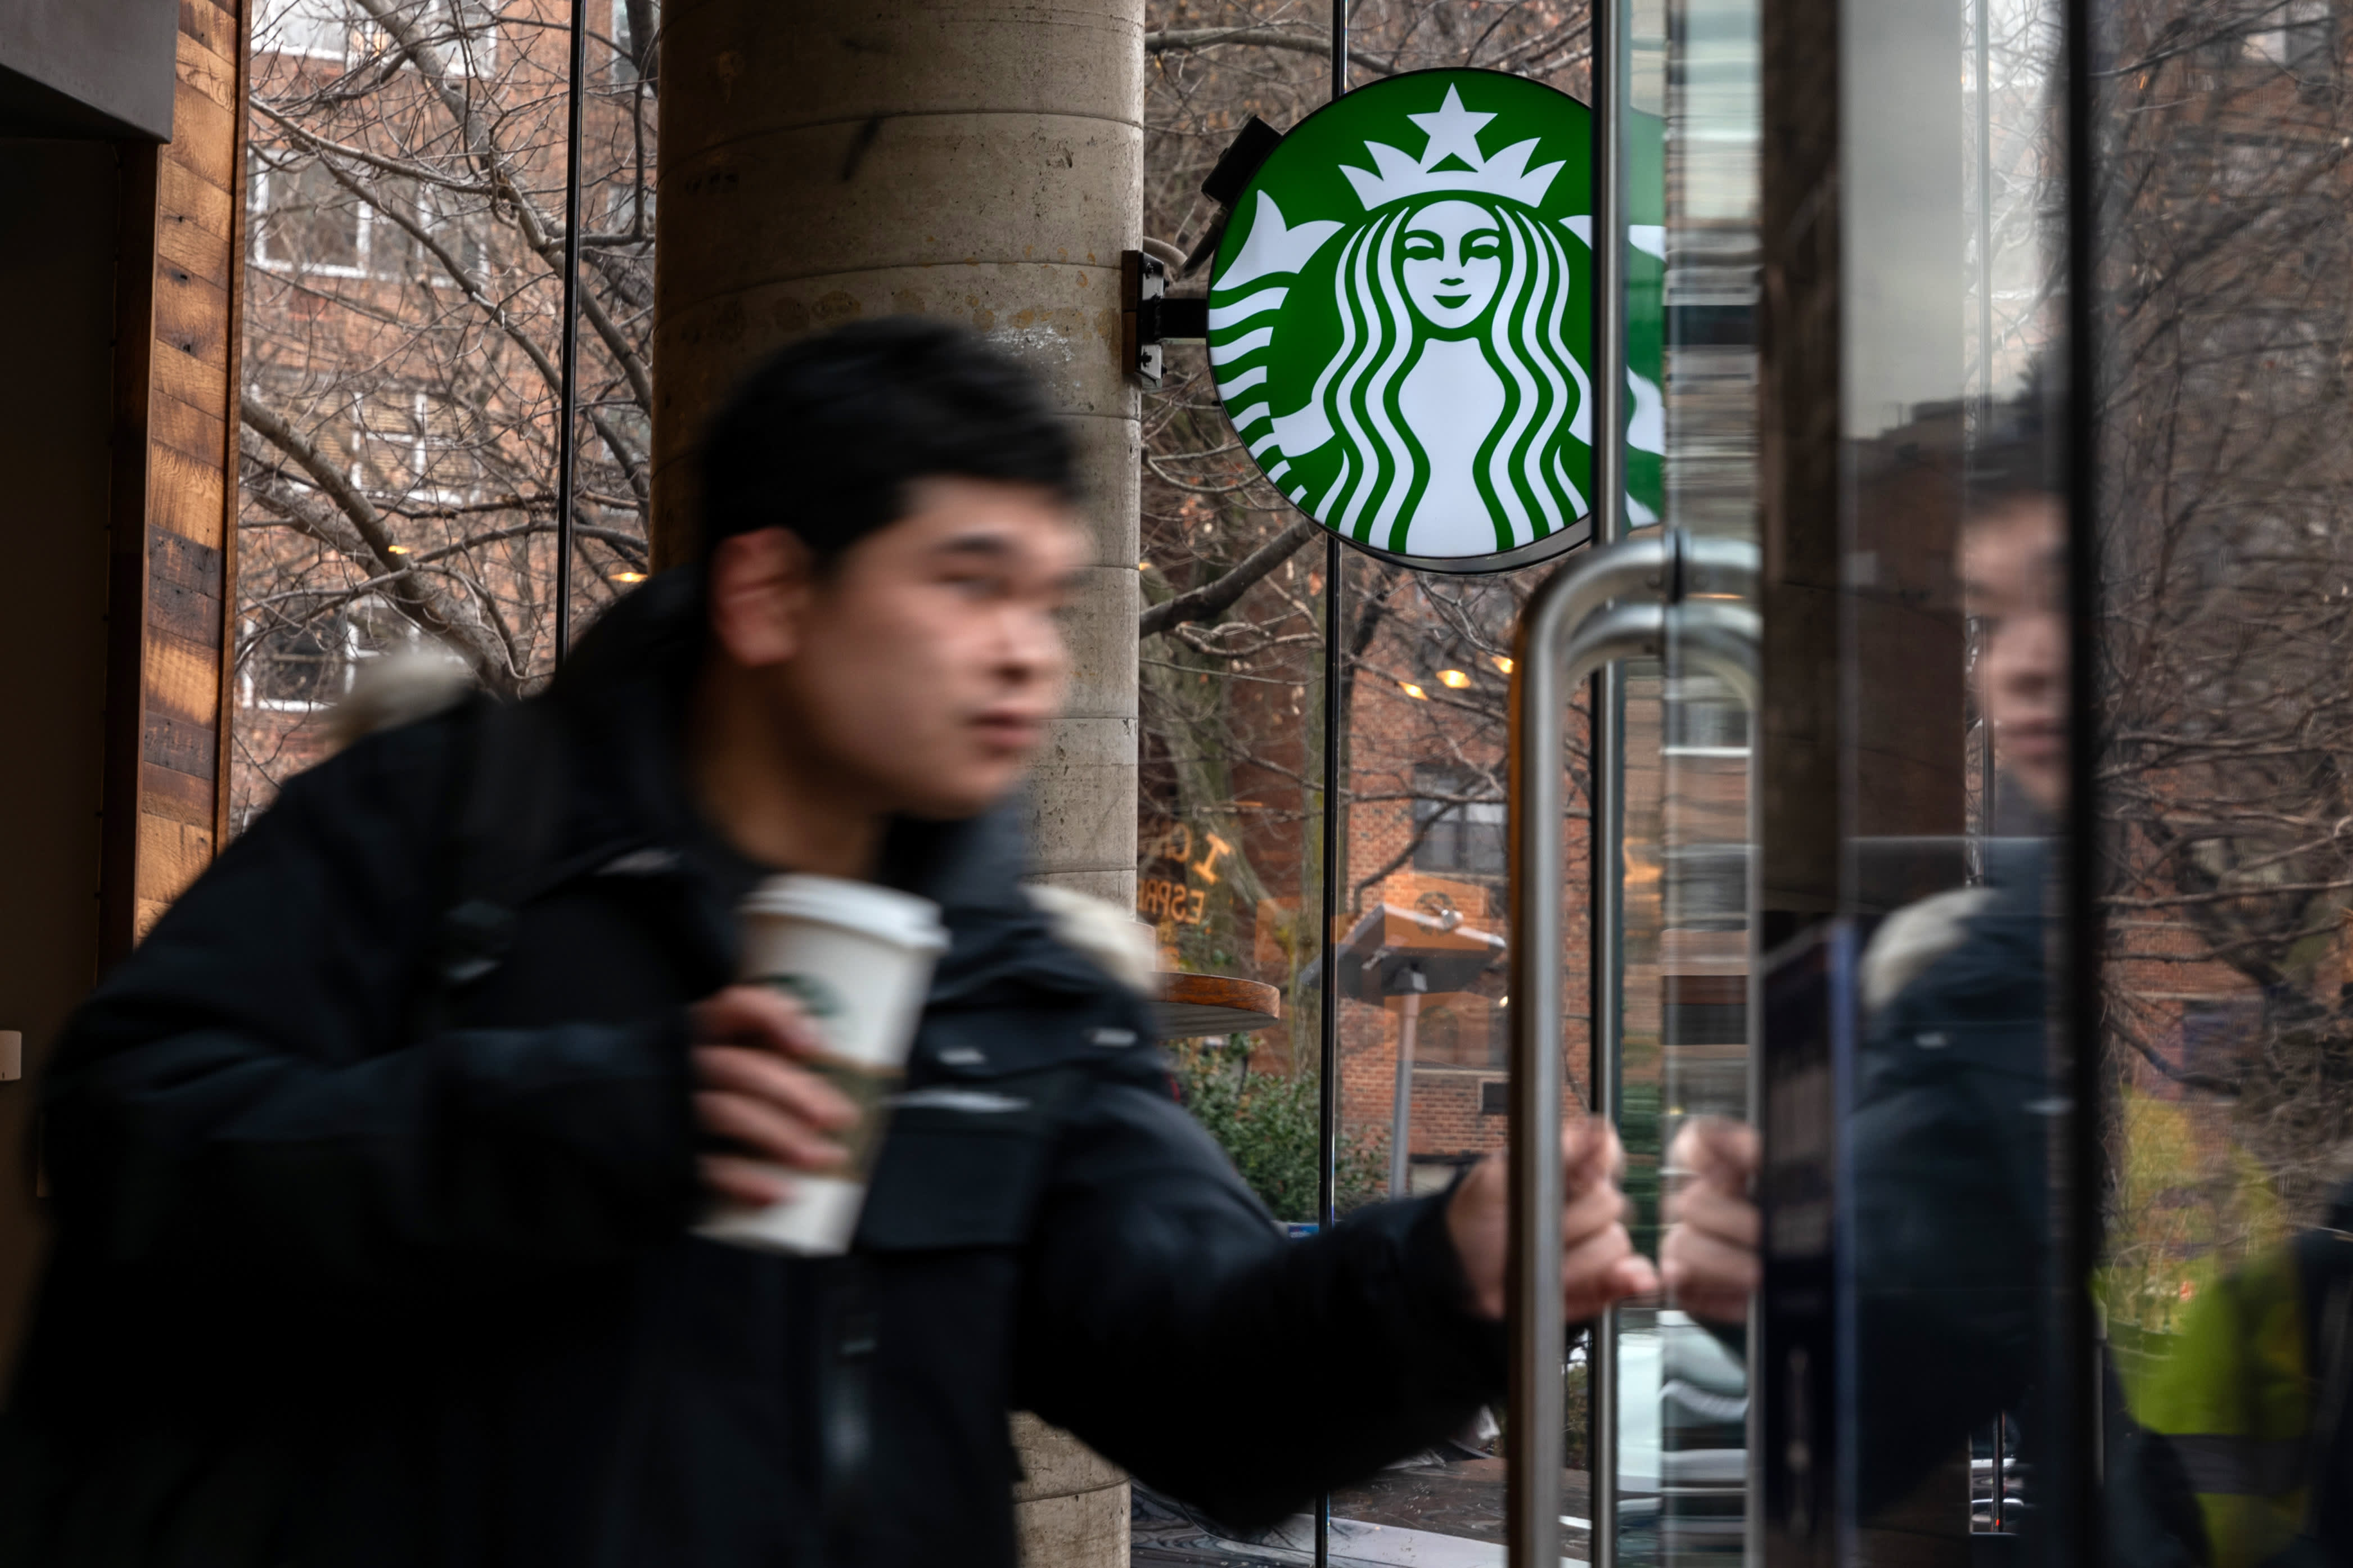 Starbucks’ earnings report was weak — but Wall Street expected worse